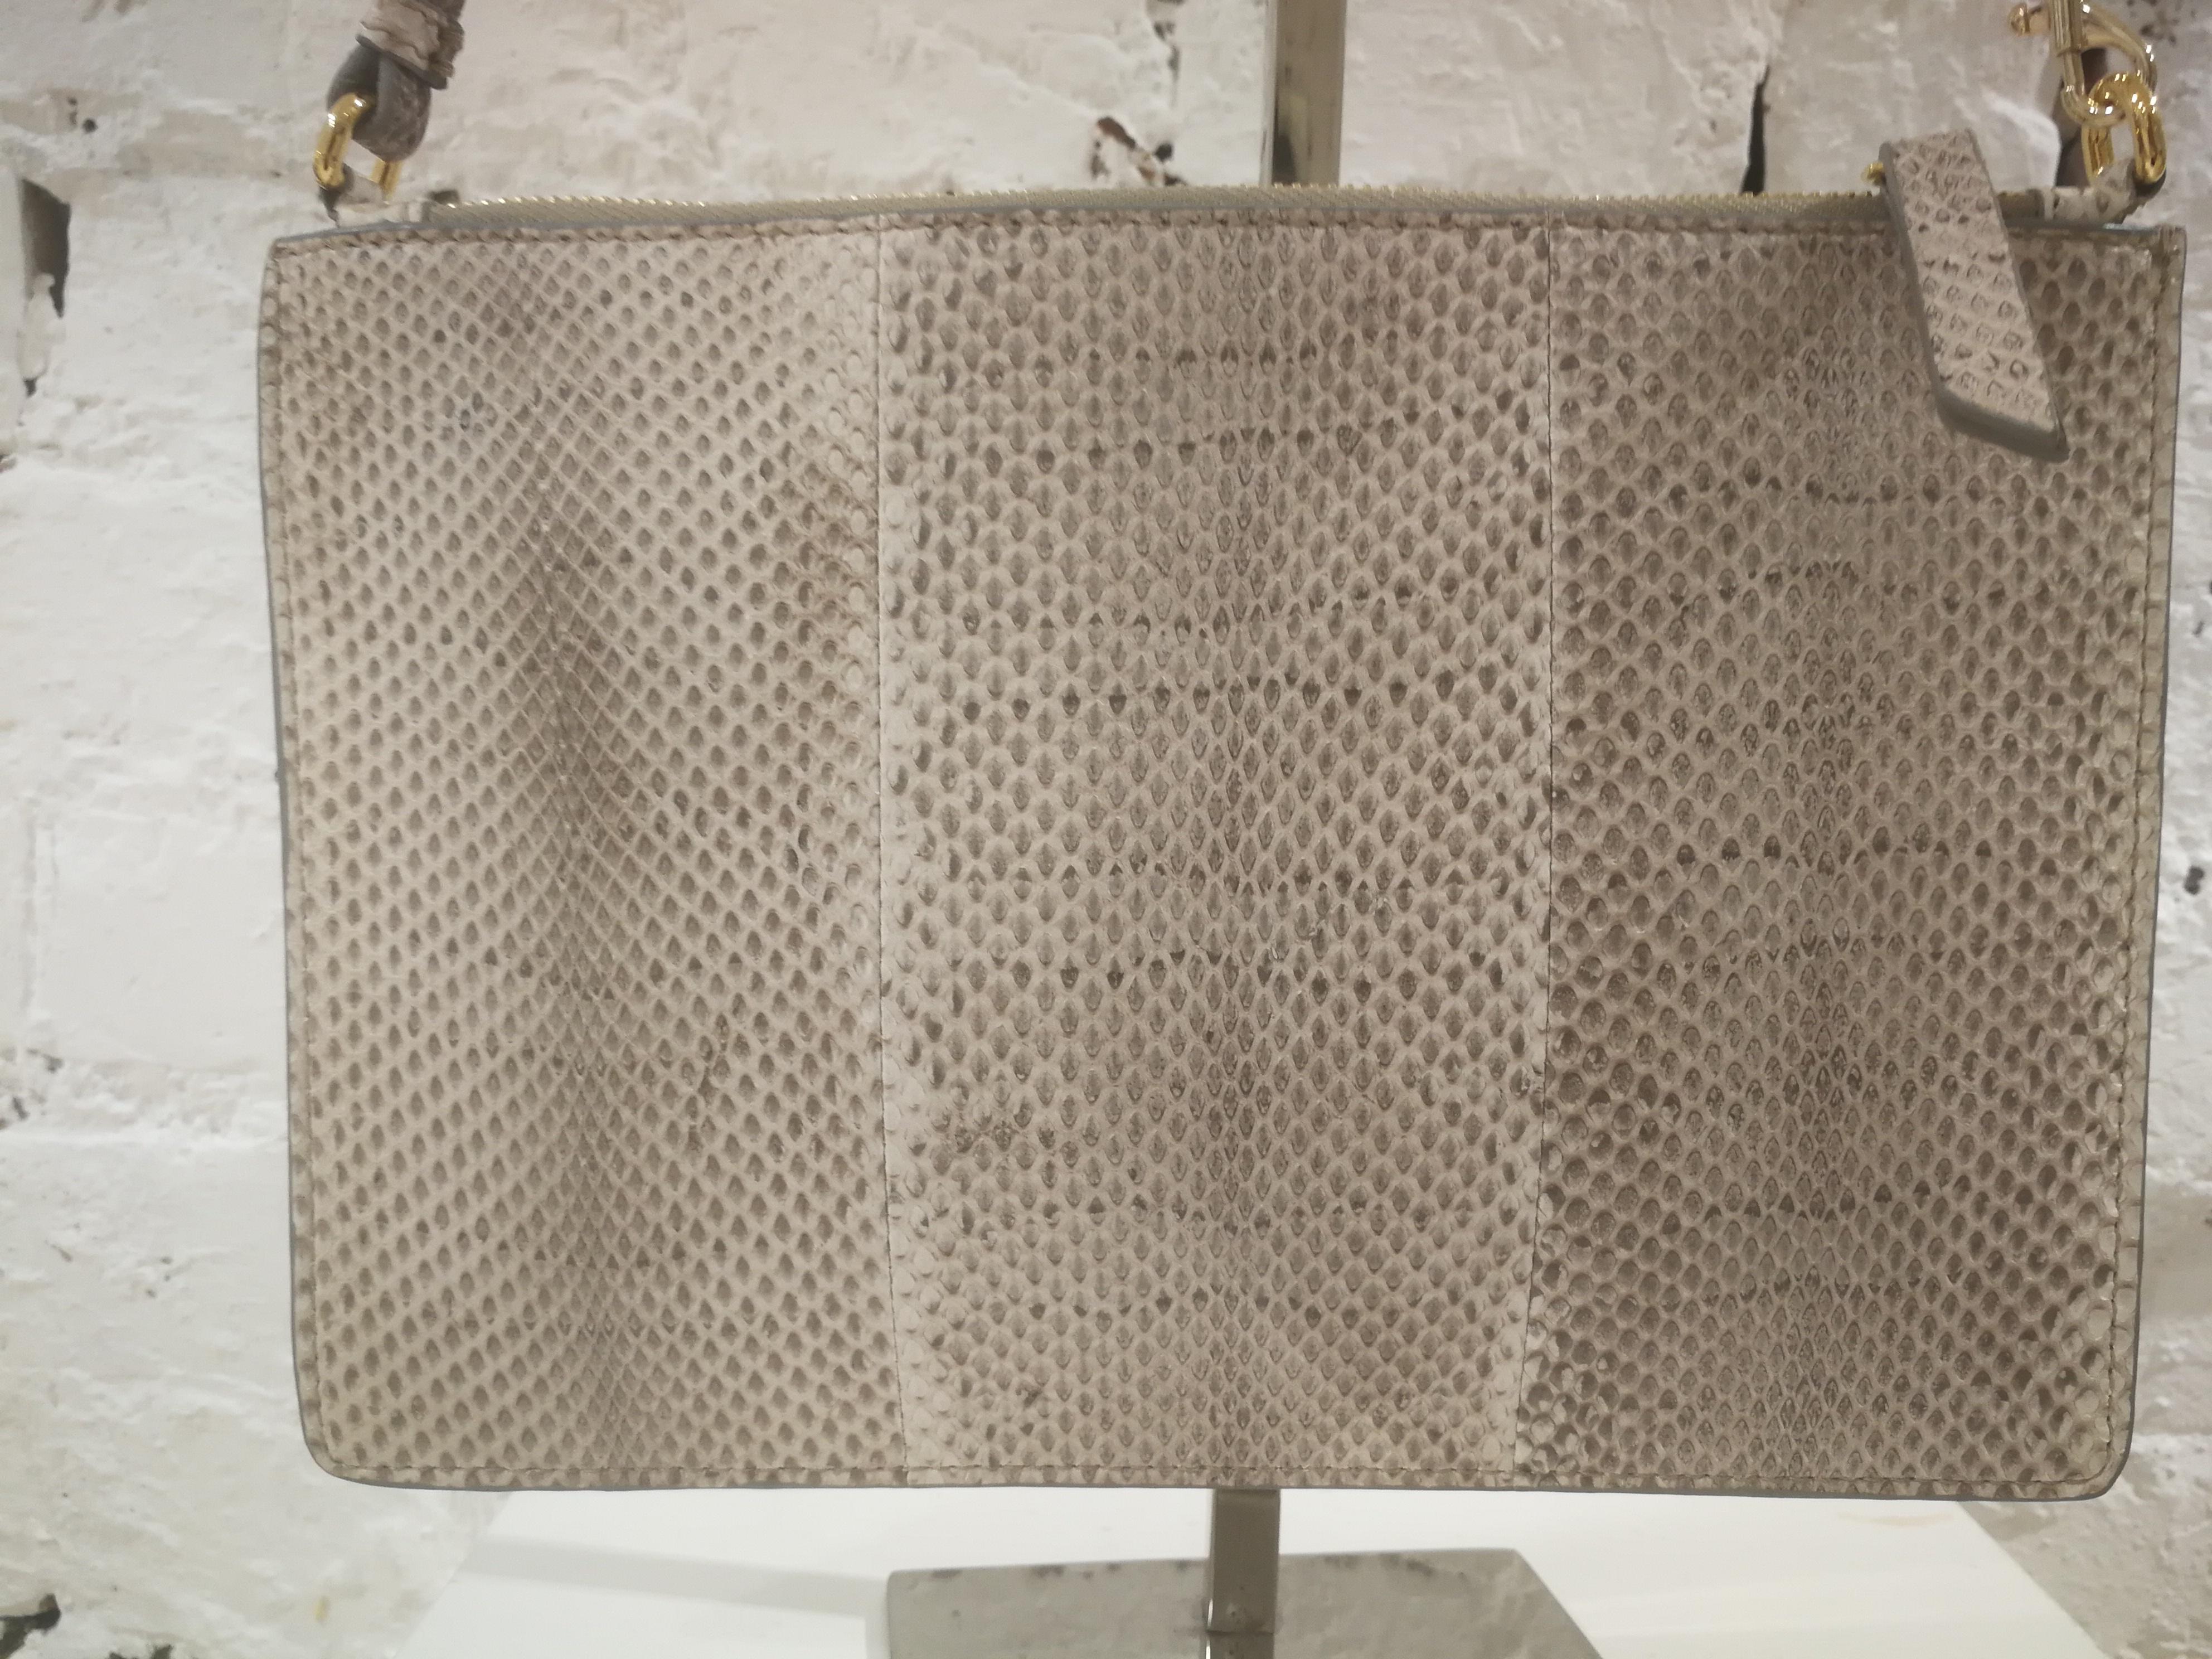 Roberto Cavalli Snake Skin Shoulder Bag

Totally made in italy

Measurements: 26 cm x 17 cm